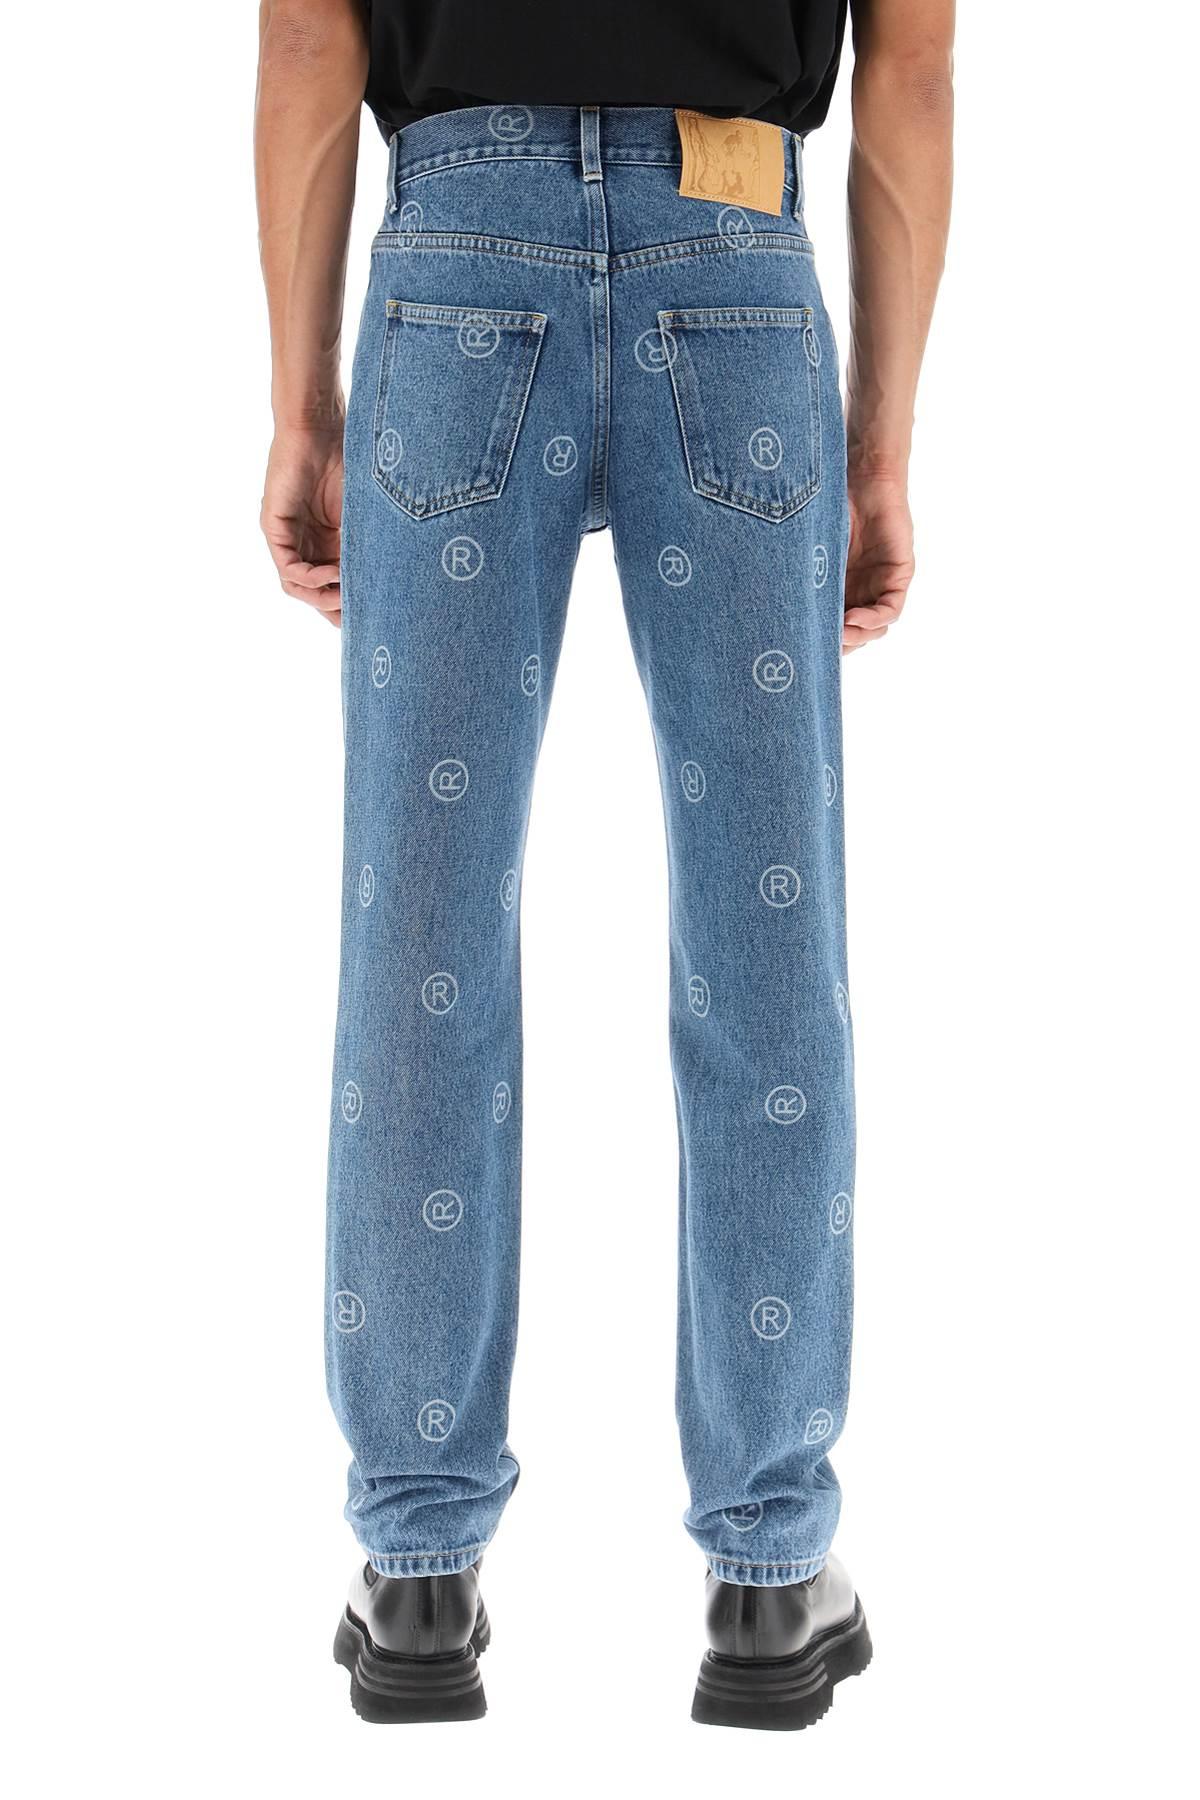 Martine Rose Monogram Slim Jeans in Blue for Men